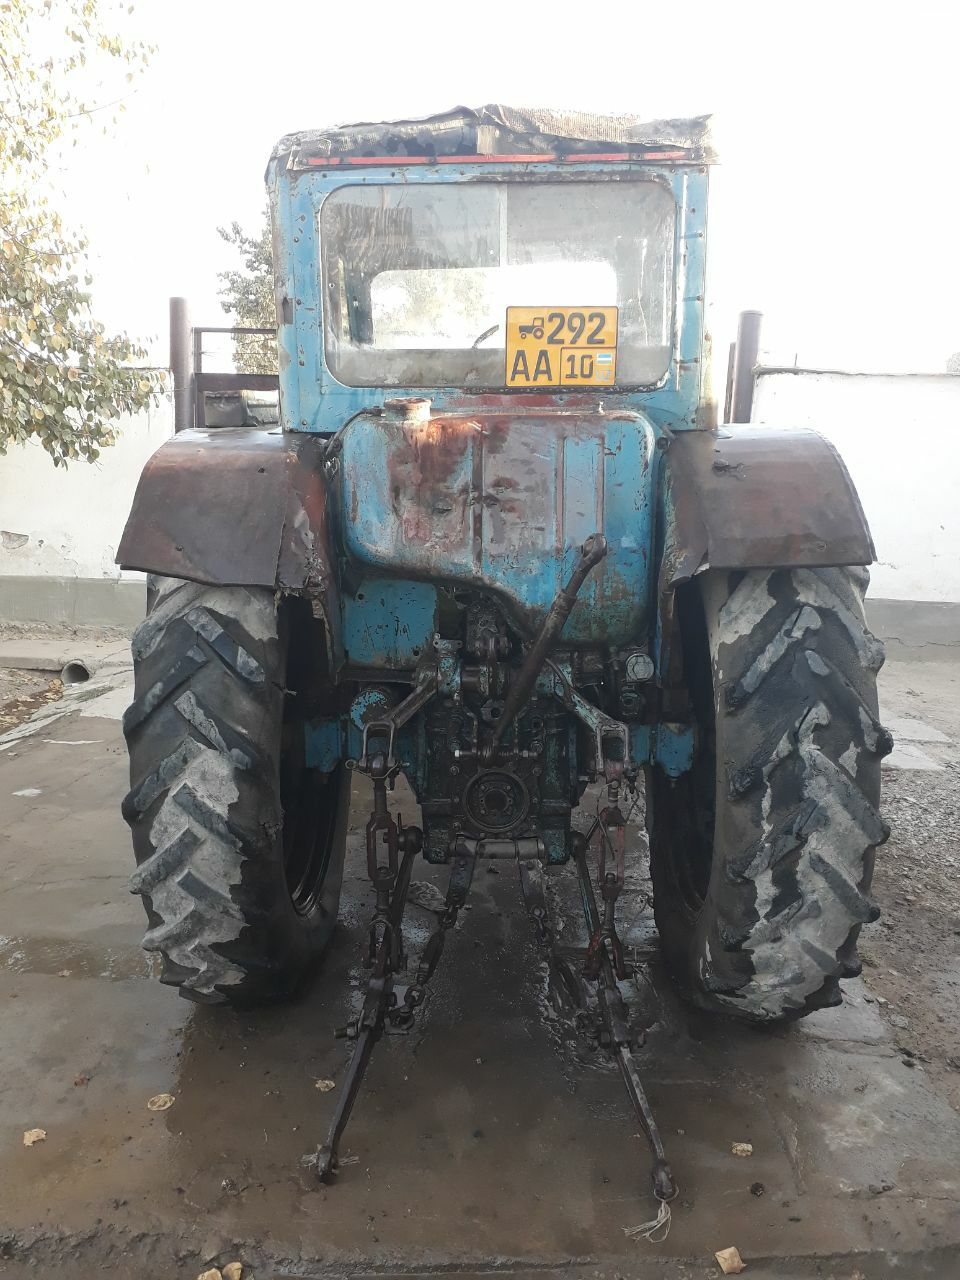 Traktor MT3-50...